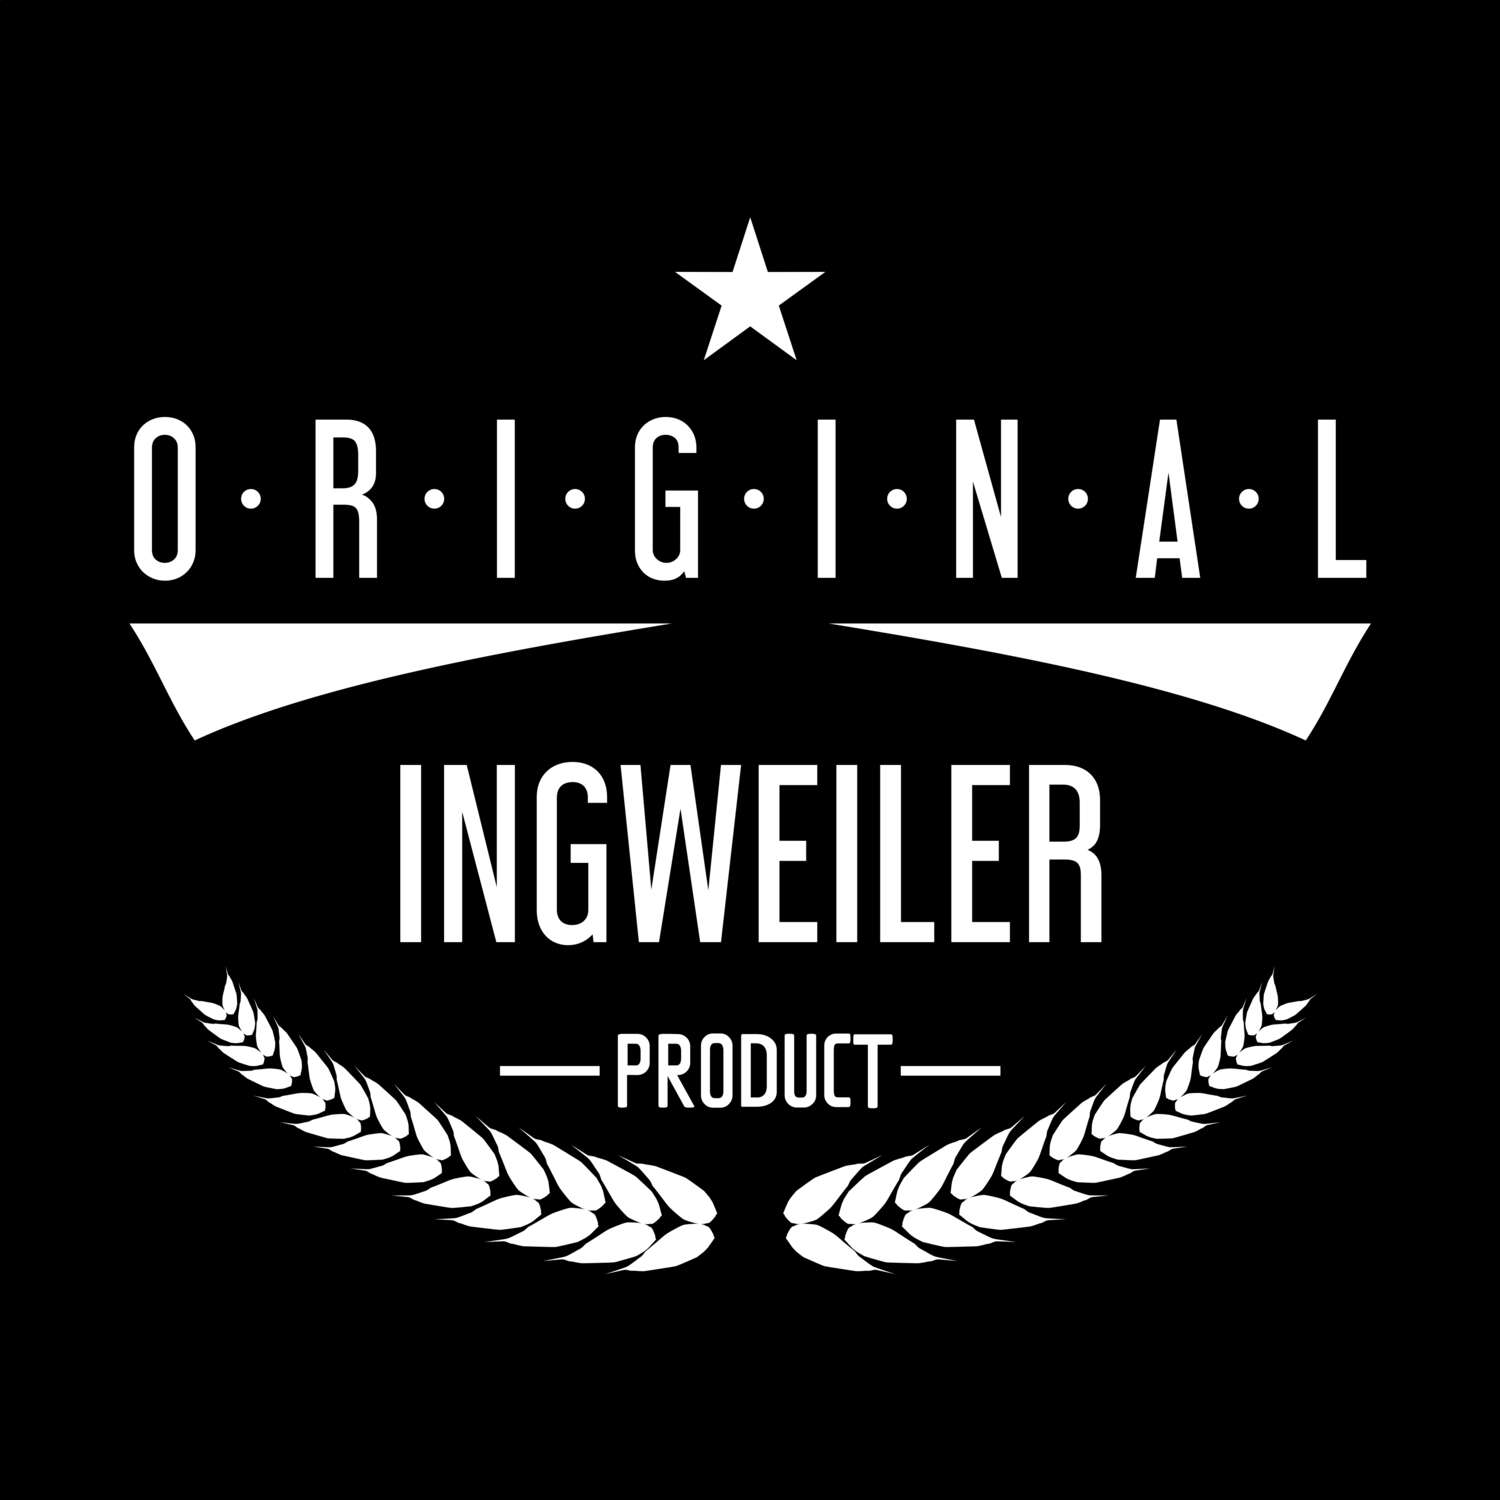 Ingweiler T-Shirt »Original Product«